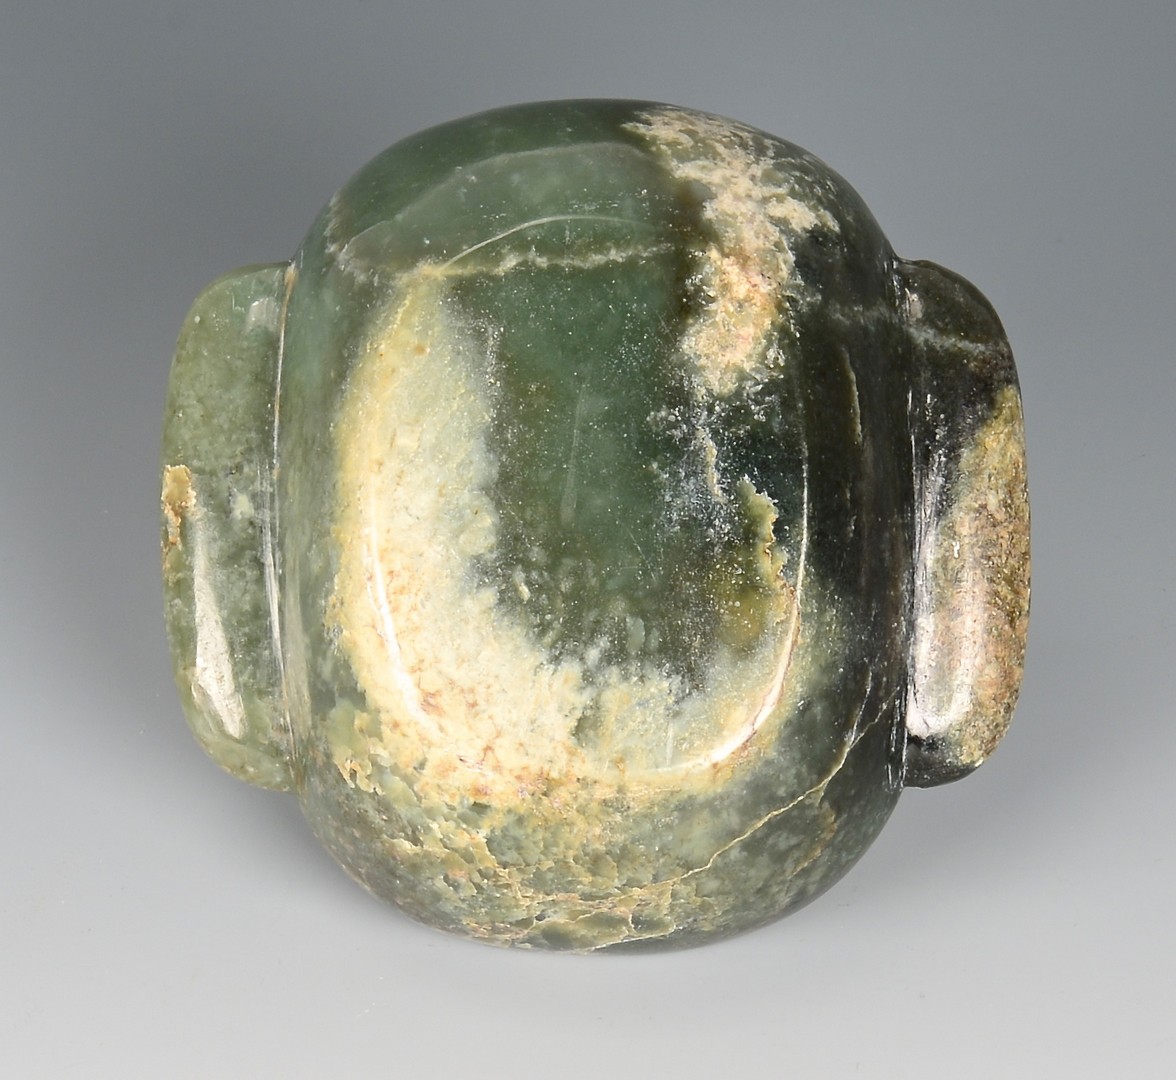 Lot 701: 3 Chinese jade and hardstone items inc. bowl, armb